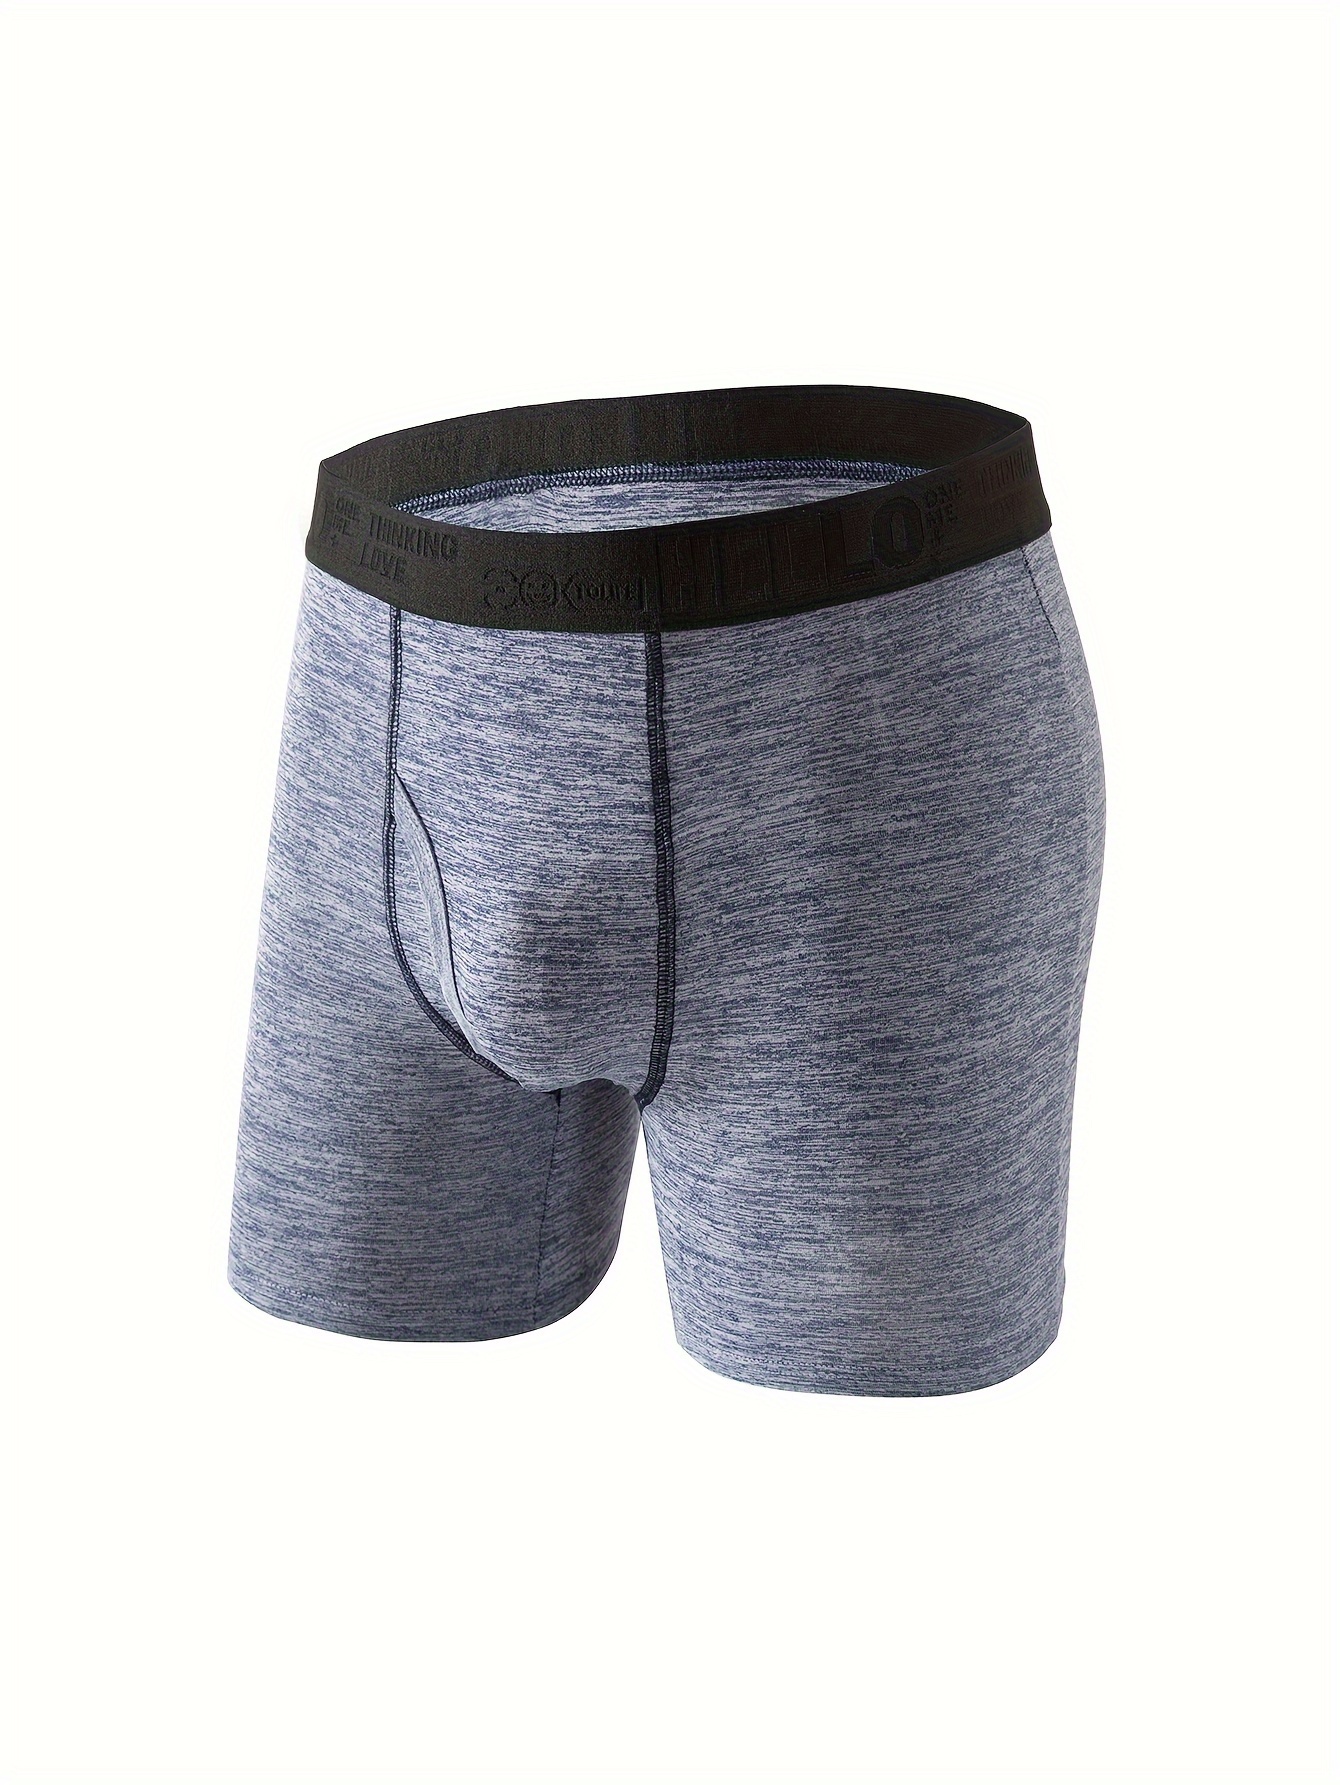 3pcs mens boxer briefs sightly stretch breathable comfortable sport underwear details 8